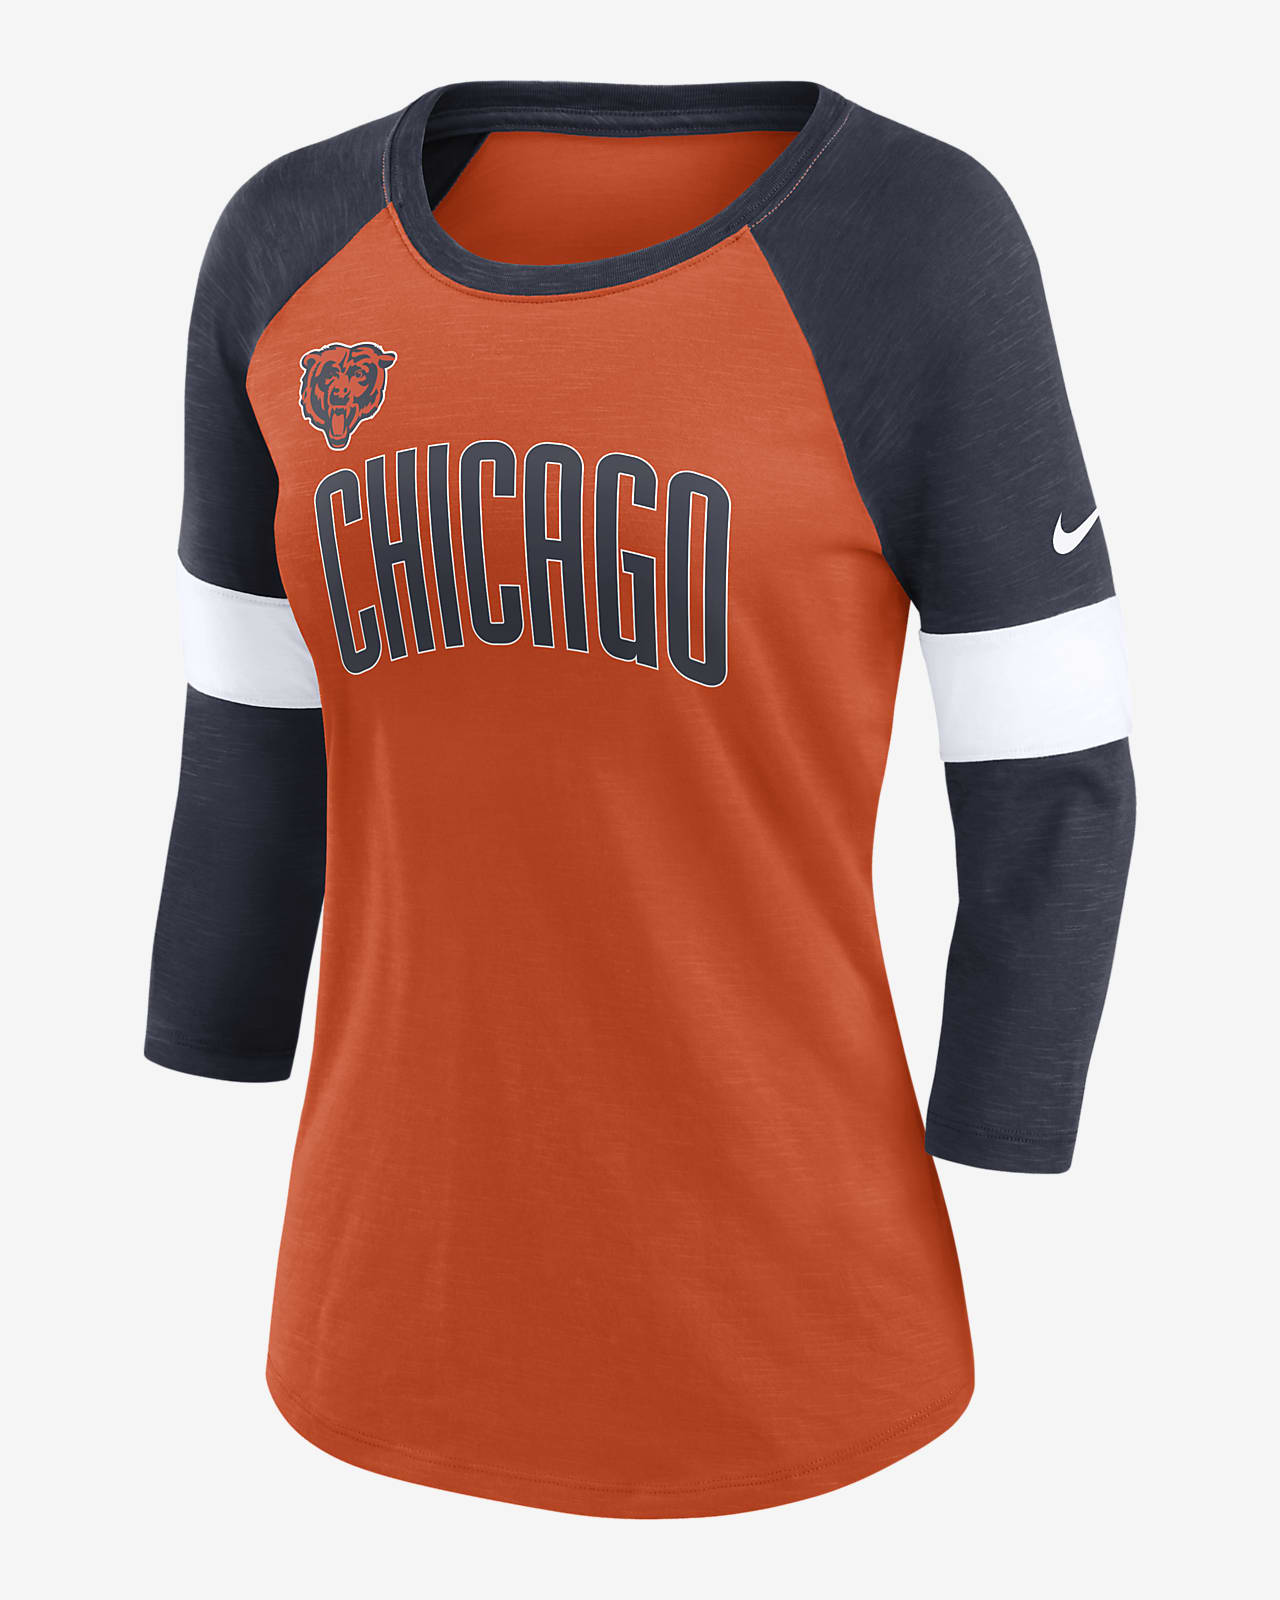 chicago bears pride shirt